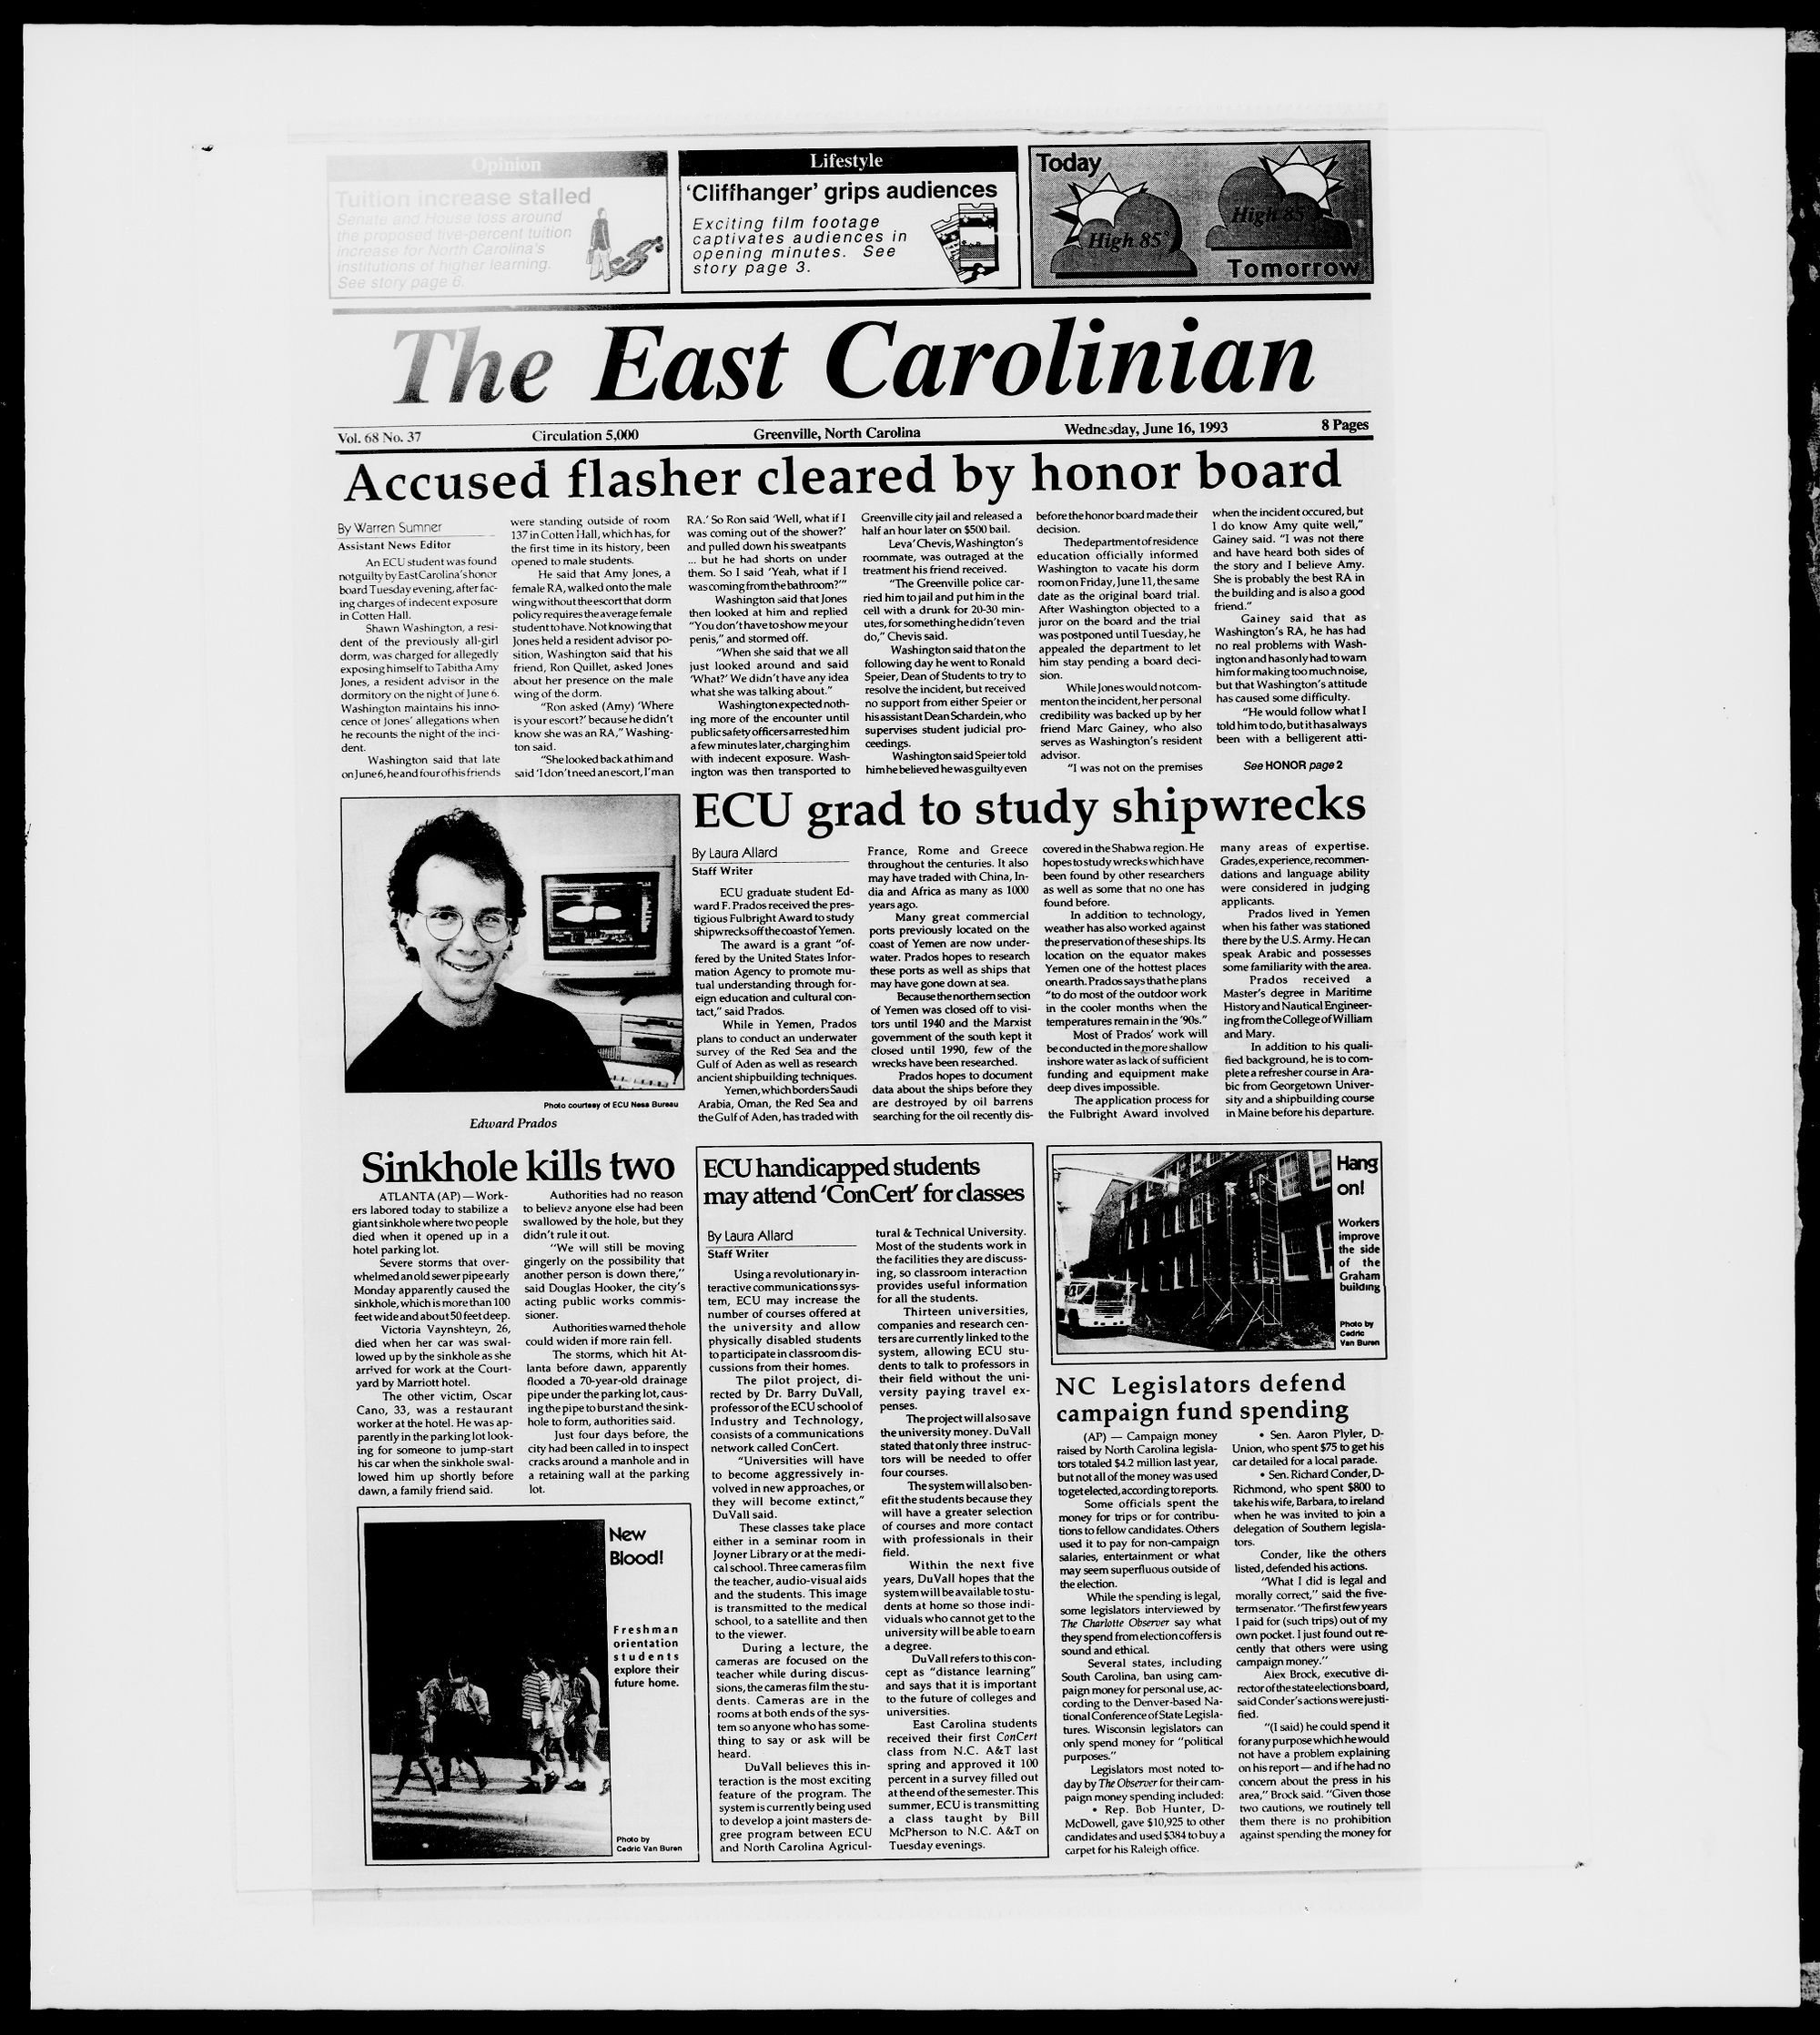 The East Carolinian, June 16, 1993 pic